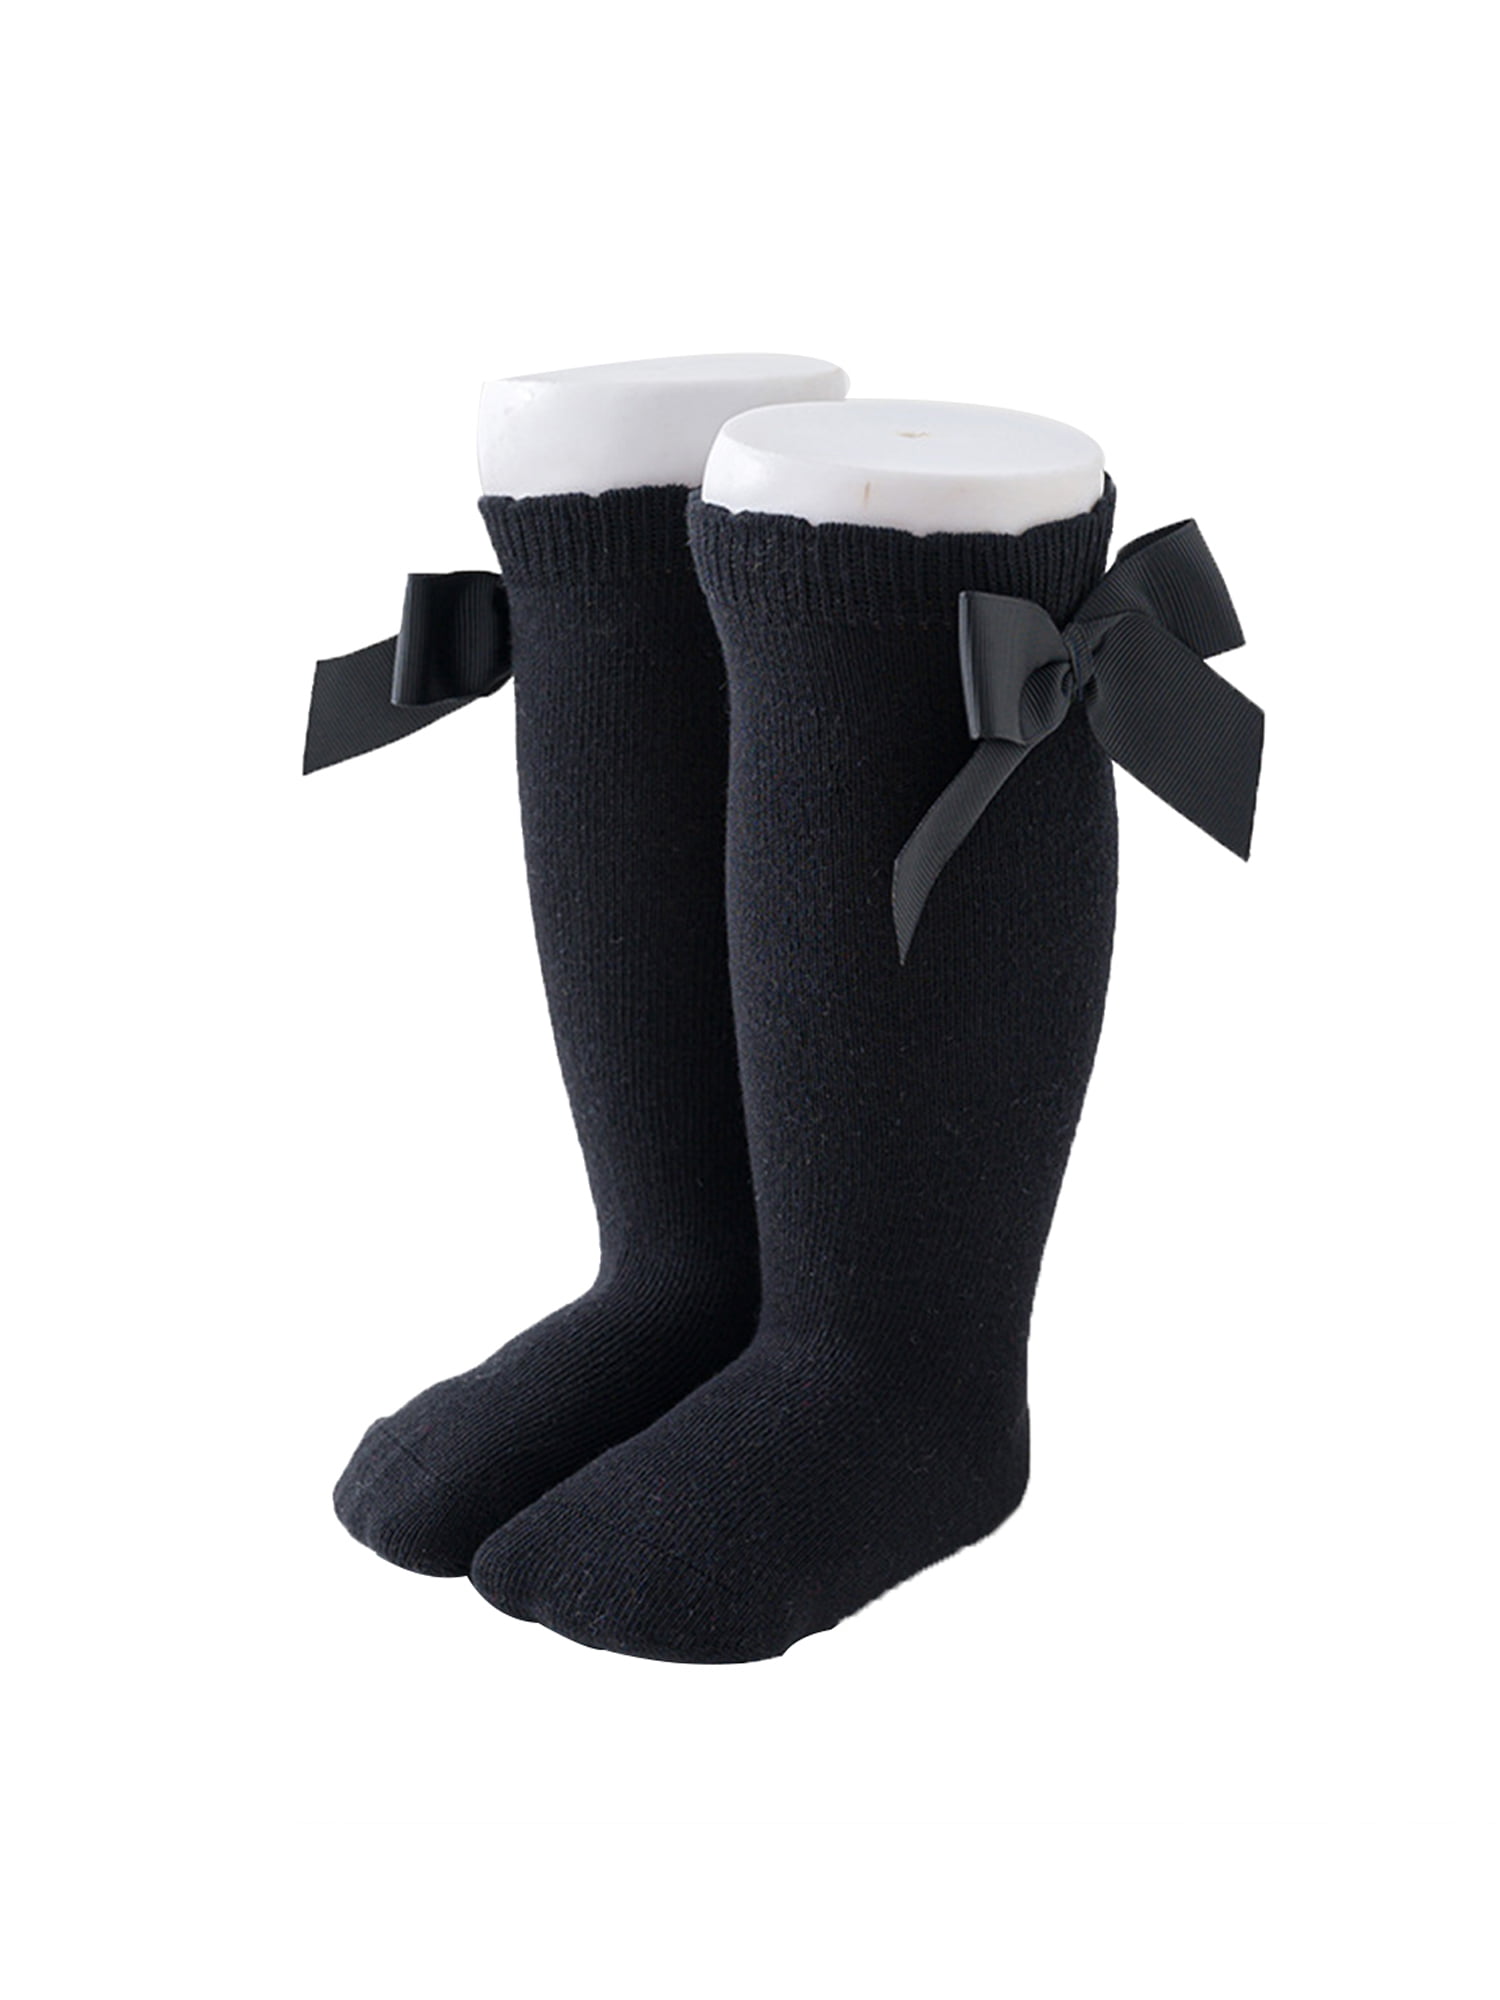 Details about   Fashion Socks Winter Warm Cotton Fleece Comfortable Thick Mid Length Women Men 